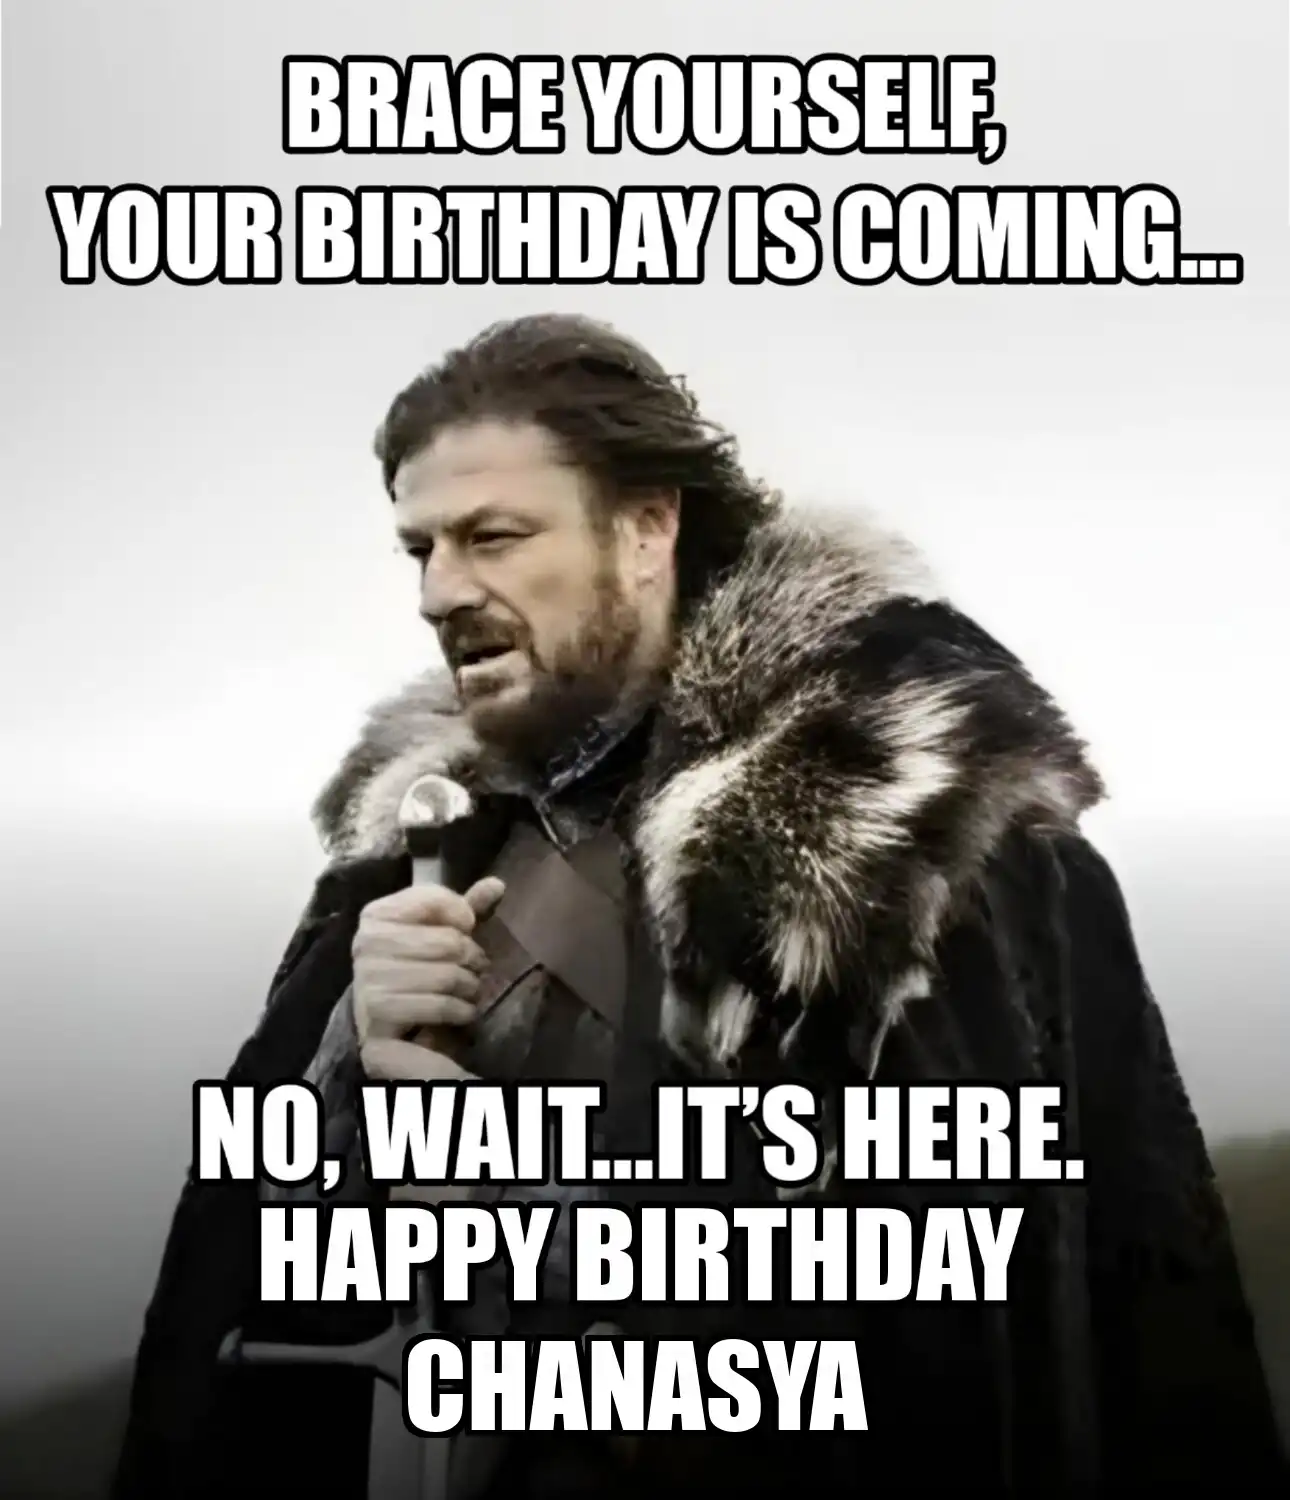 Happy Birthday Chanasya Brace Yourself Your Birthday Is Coming Meme